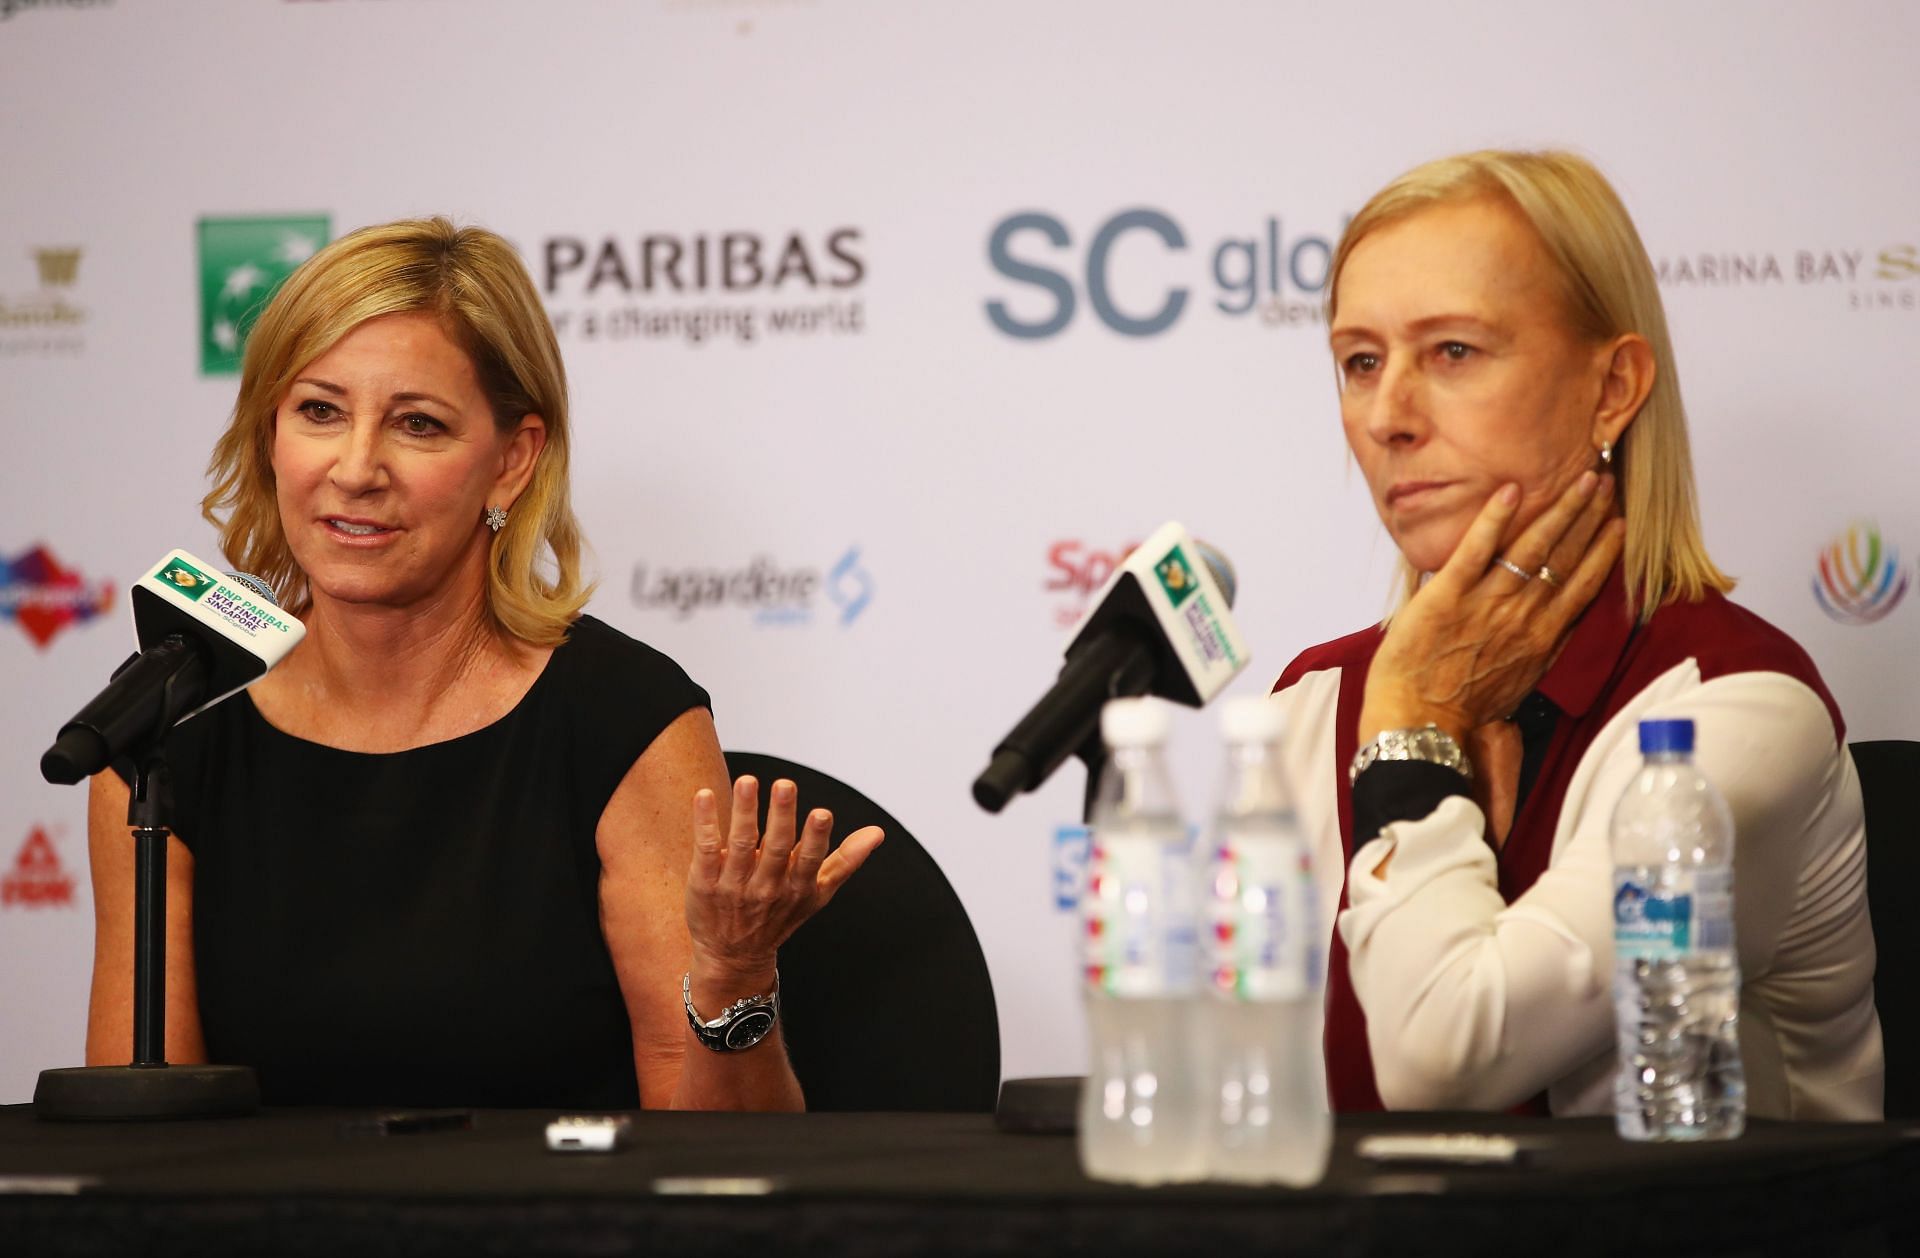 Martina Navratilova and Chris Evert ahead of the 2016 WTA Finals in Singapore.